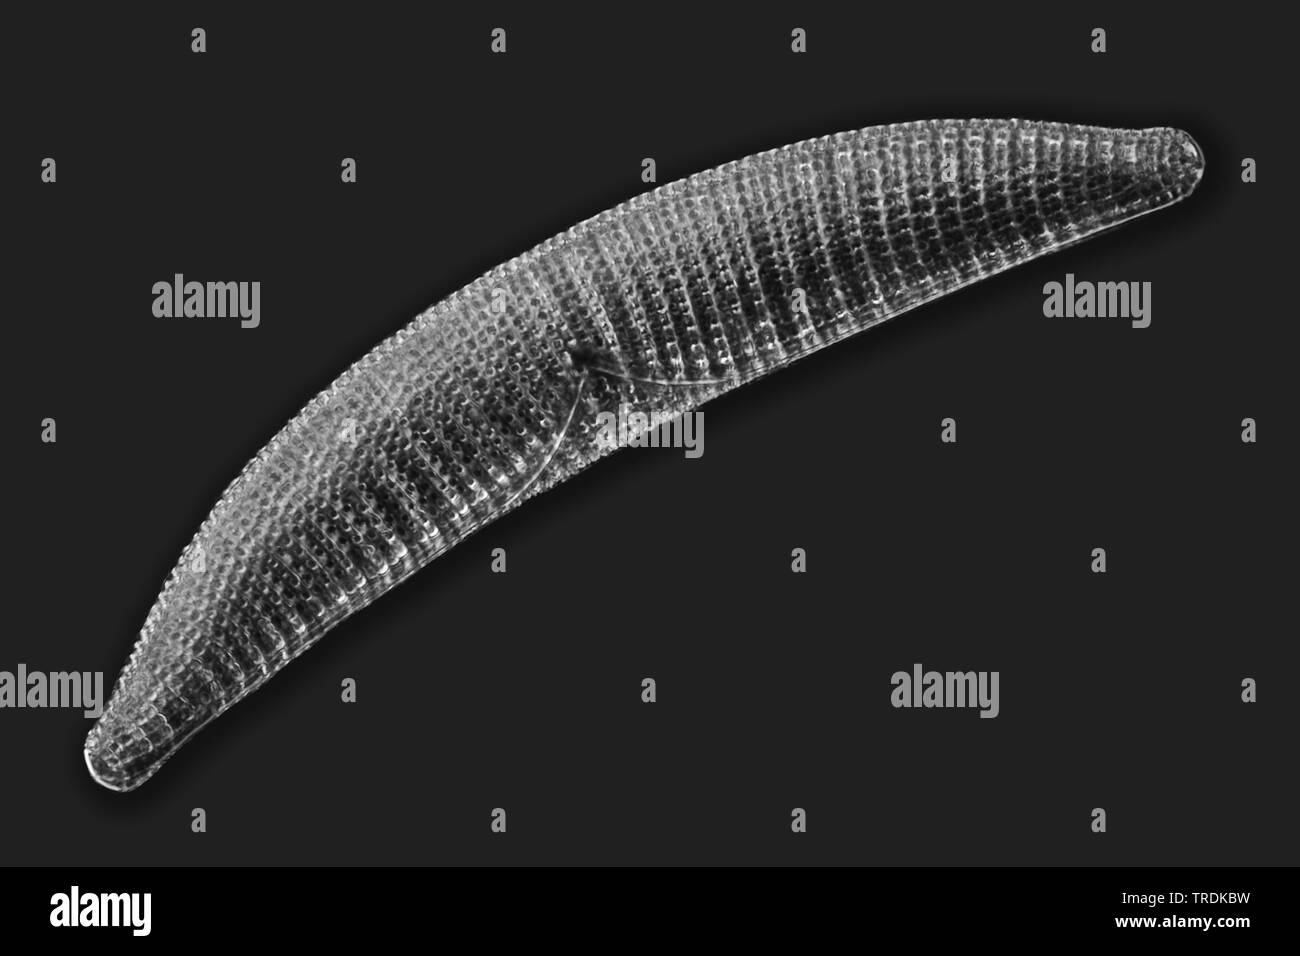 diatom (Diatomeae), fossile diatom in darkfield, x 180 Stock Photo